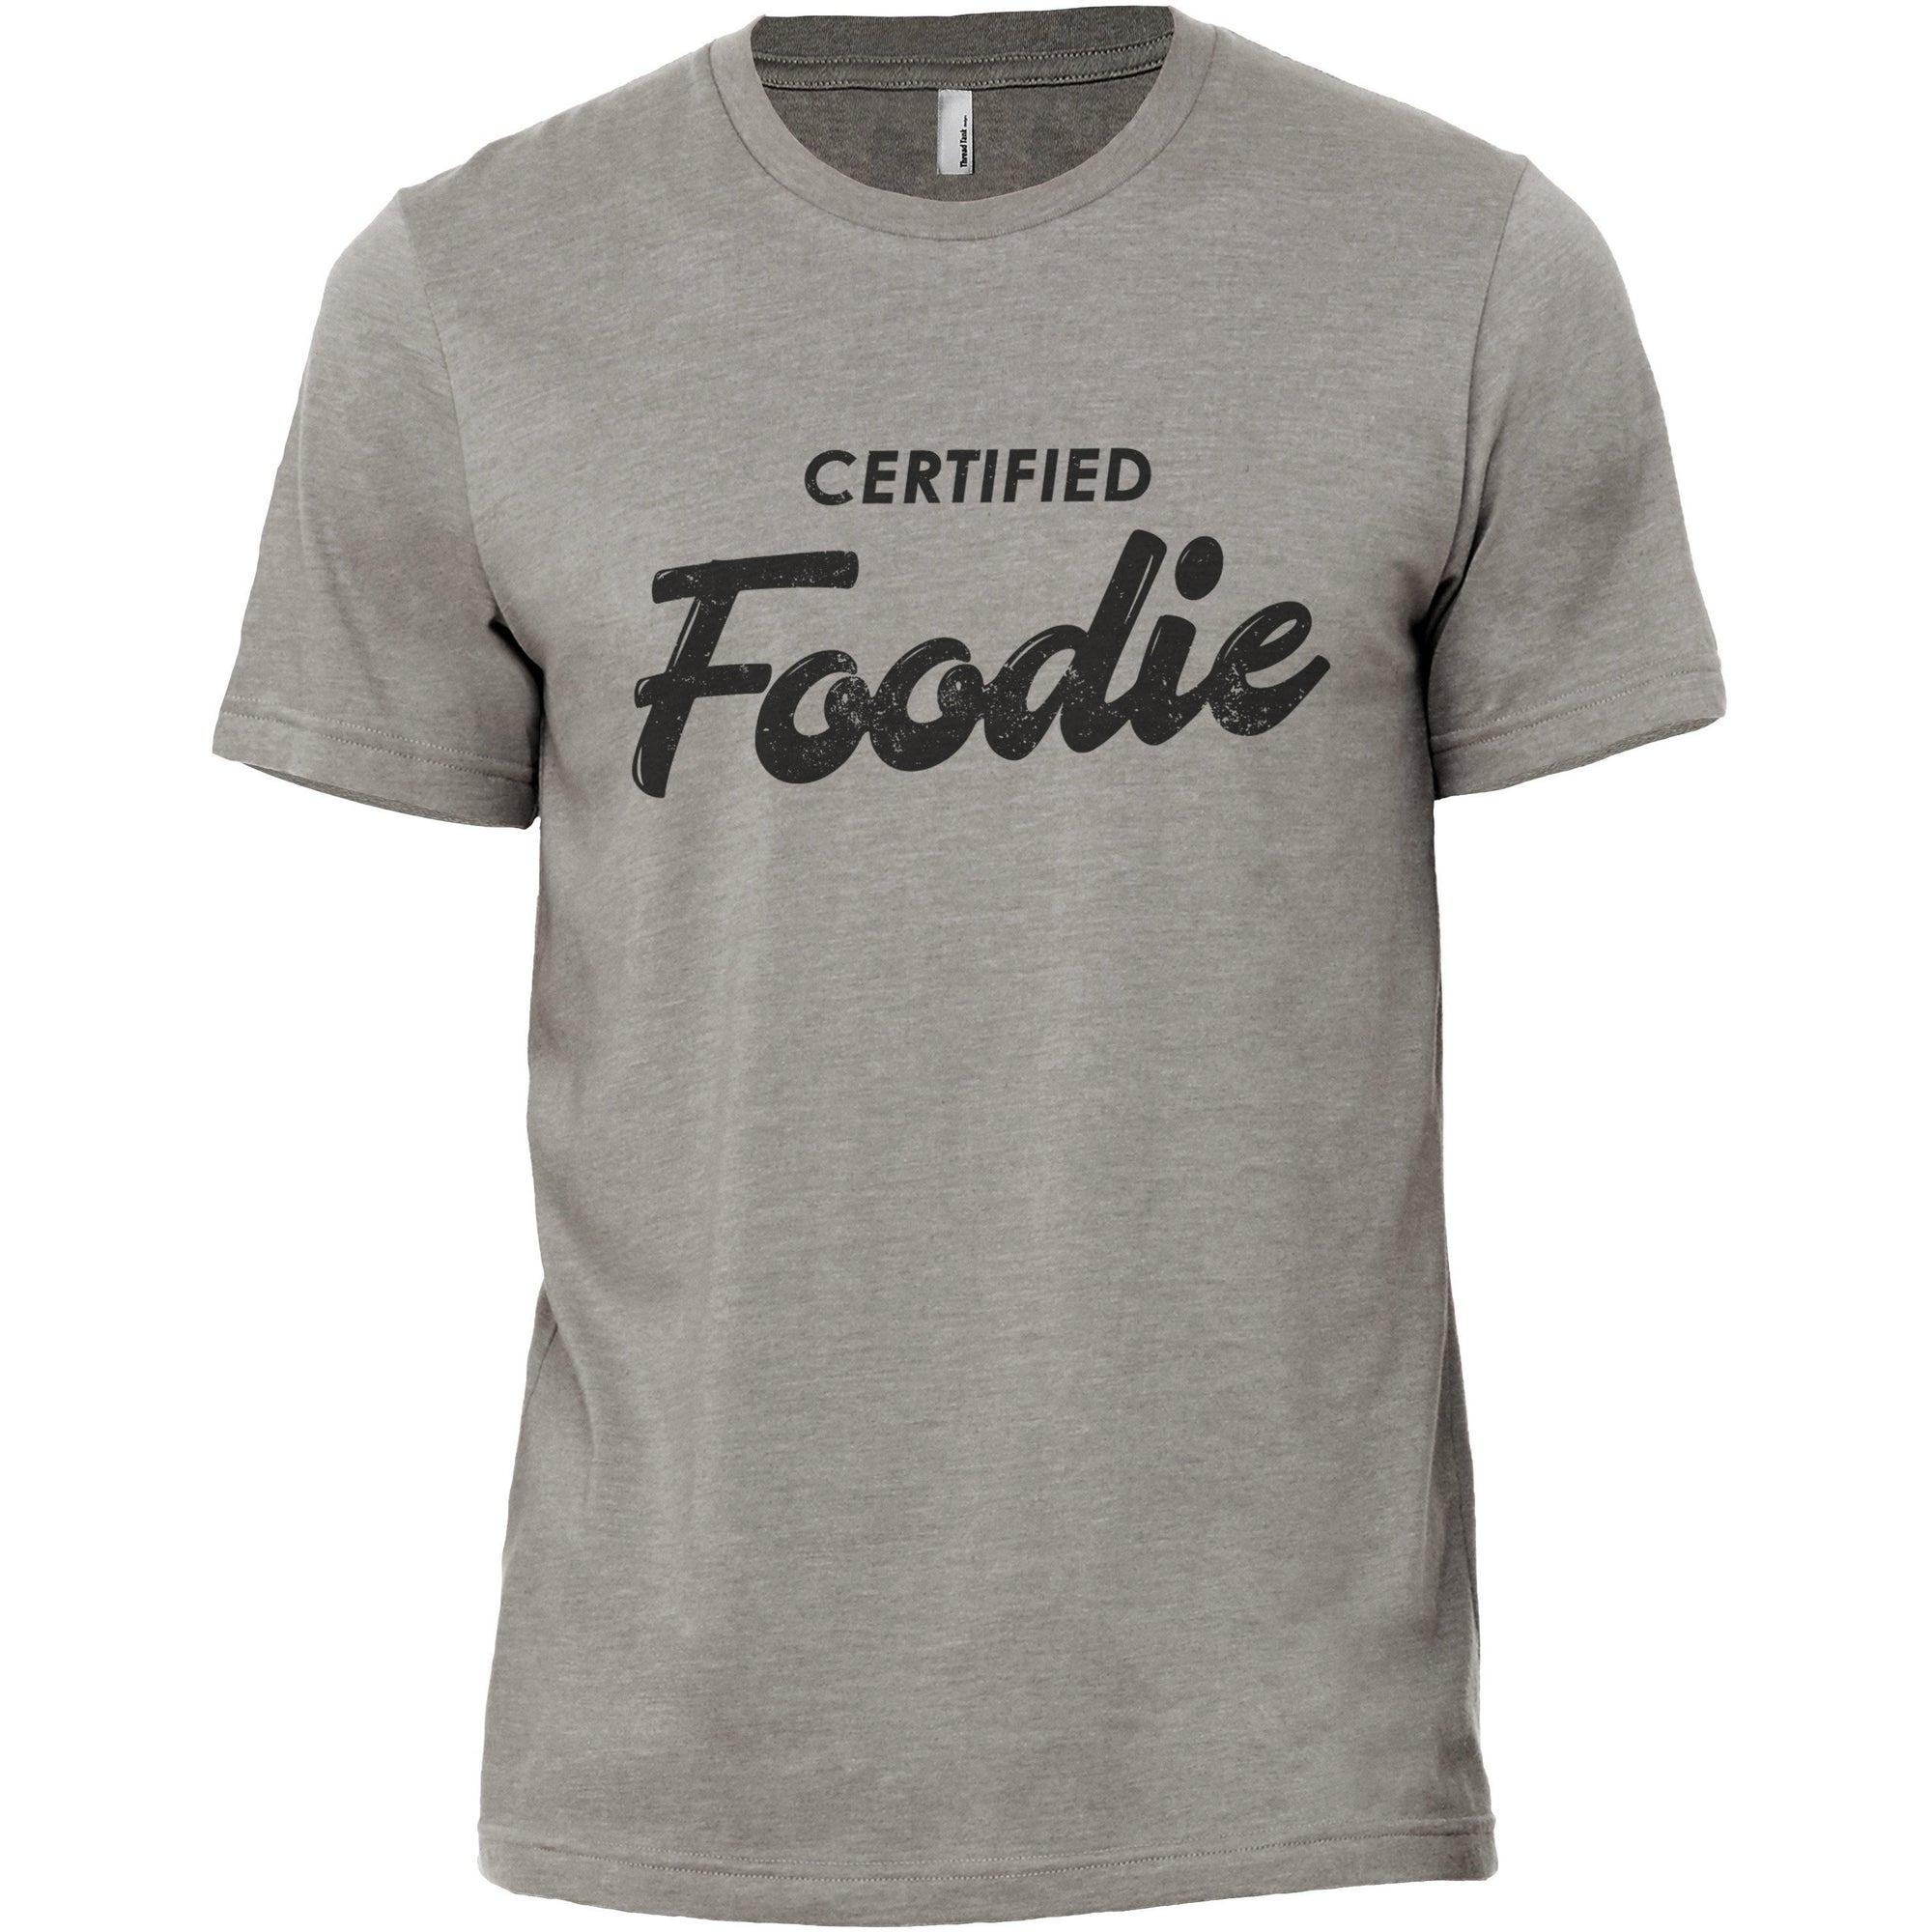 Certified Foodie Military Grey Printed Graphic Men's Crew T-Shirt Tee